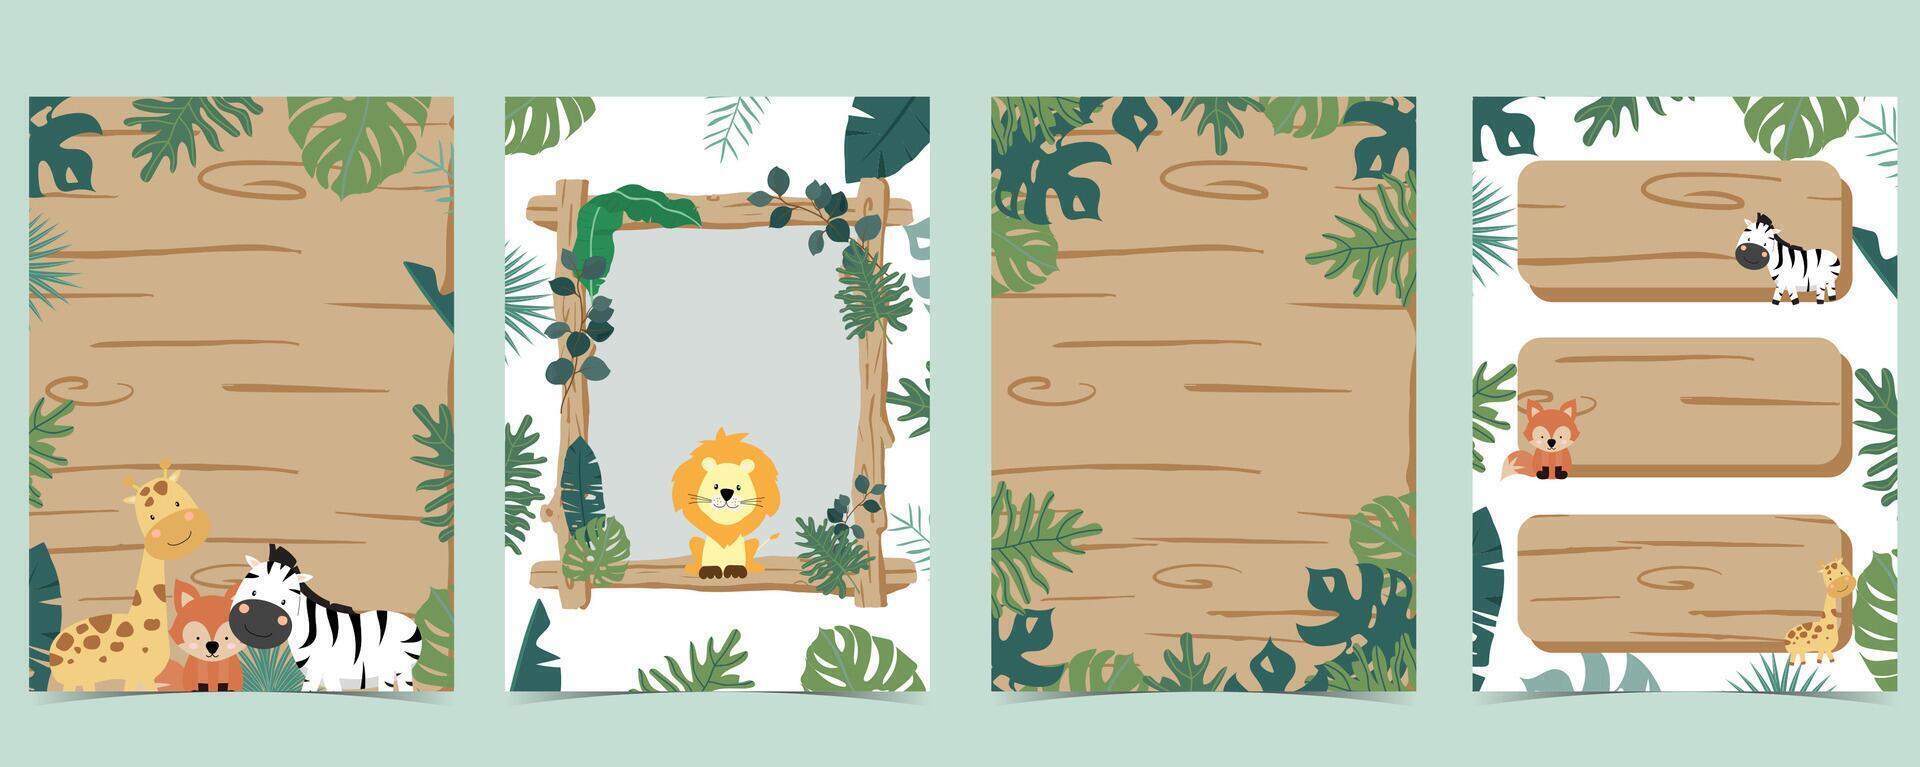 safari banner with giraffe,elephant,zebra,fox and leaf frame.vector illustration for a4 design vector